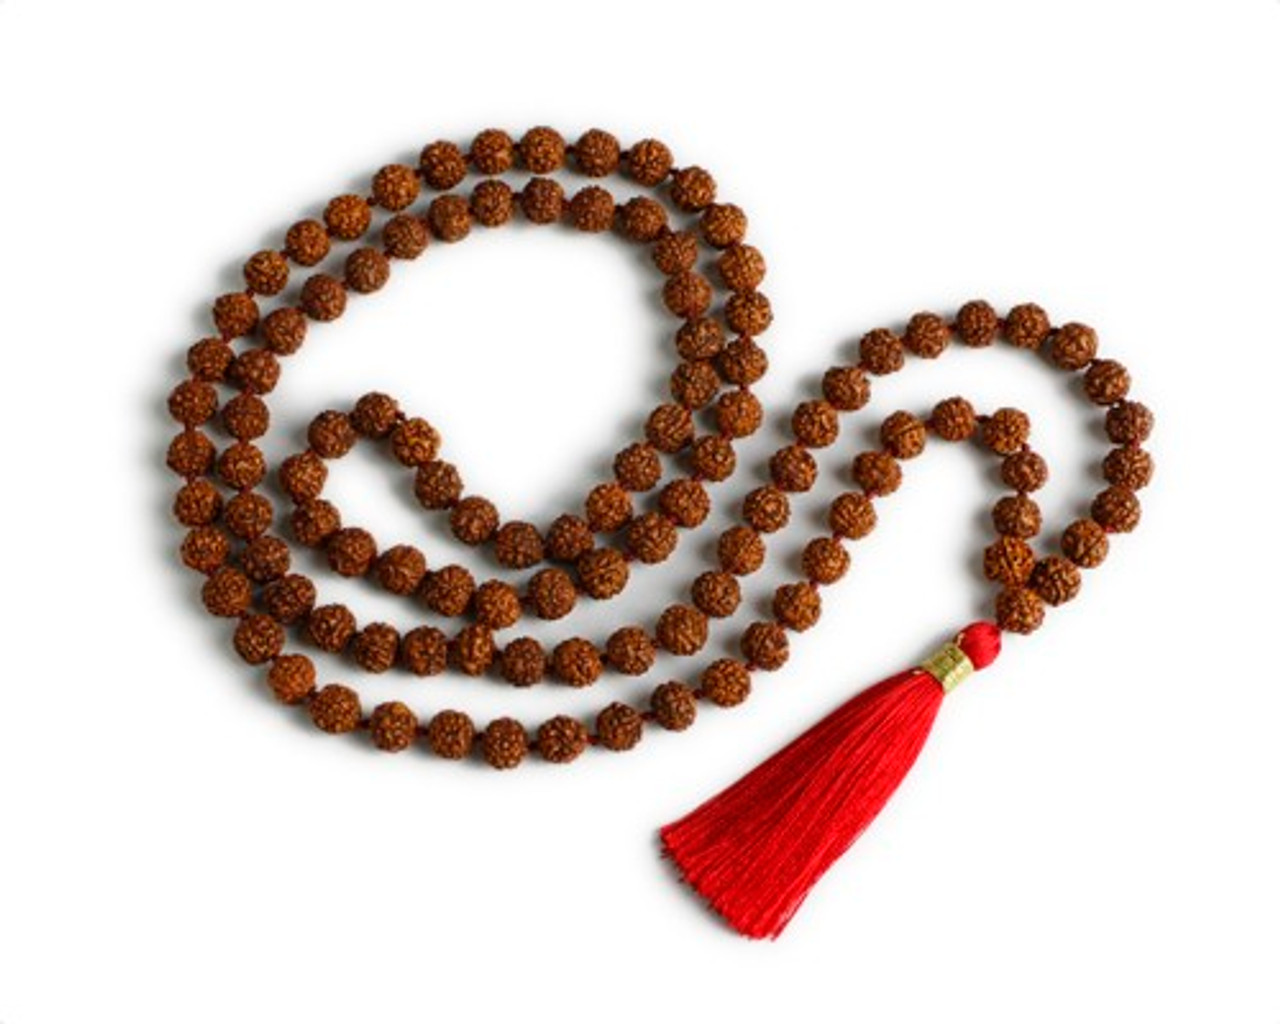  Monk Beads